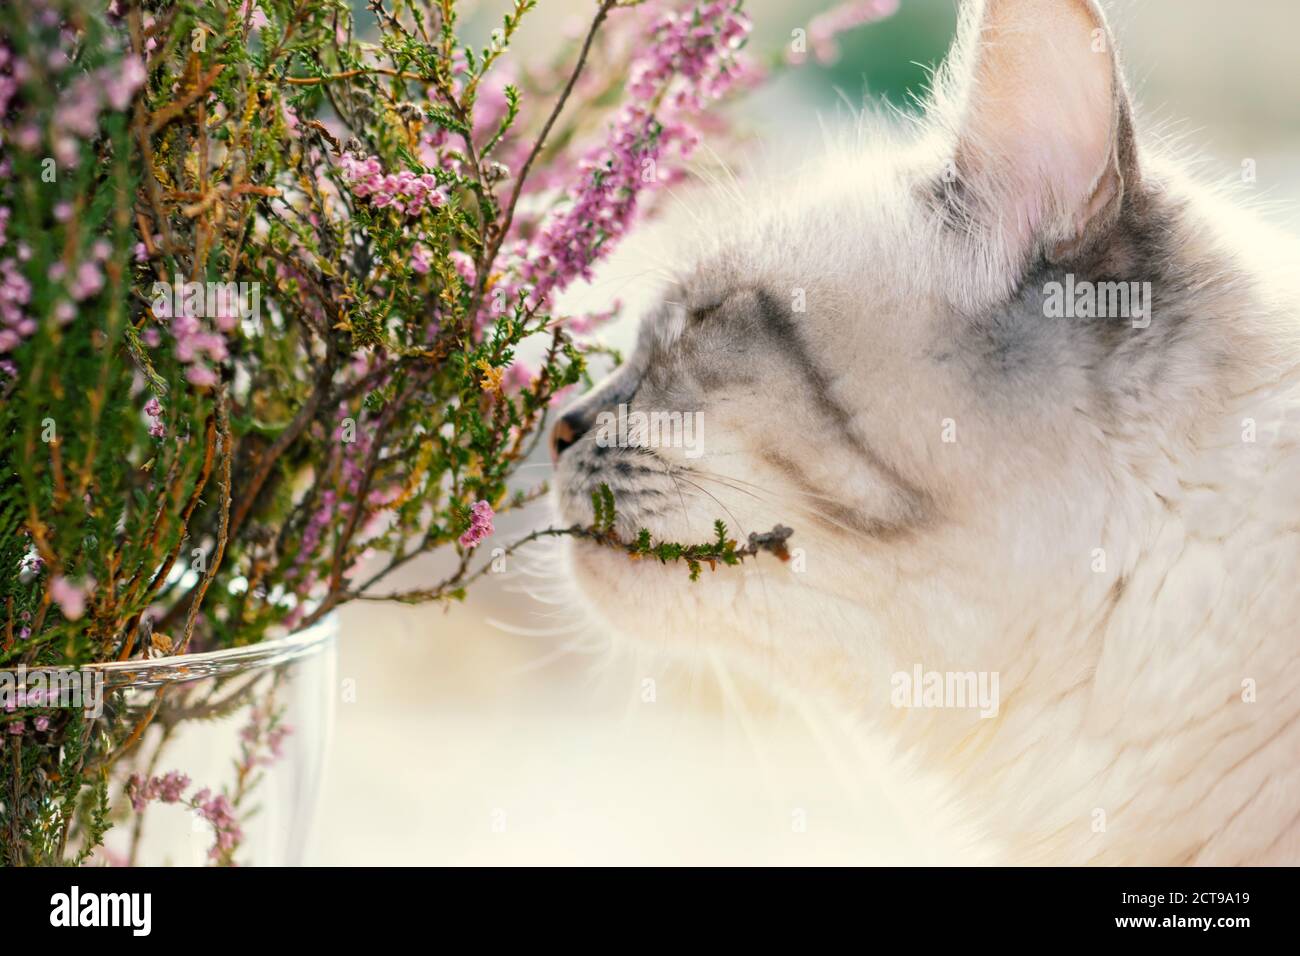 Siberian Neva Masquerade cat sniffing purple heather bush blossoms. Cheek of the cat is in camera focus Stock Photo